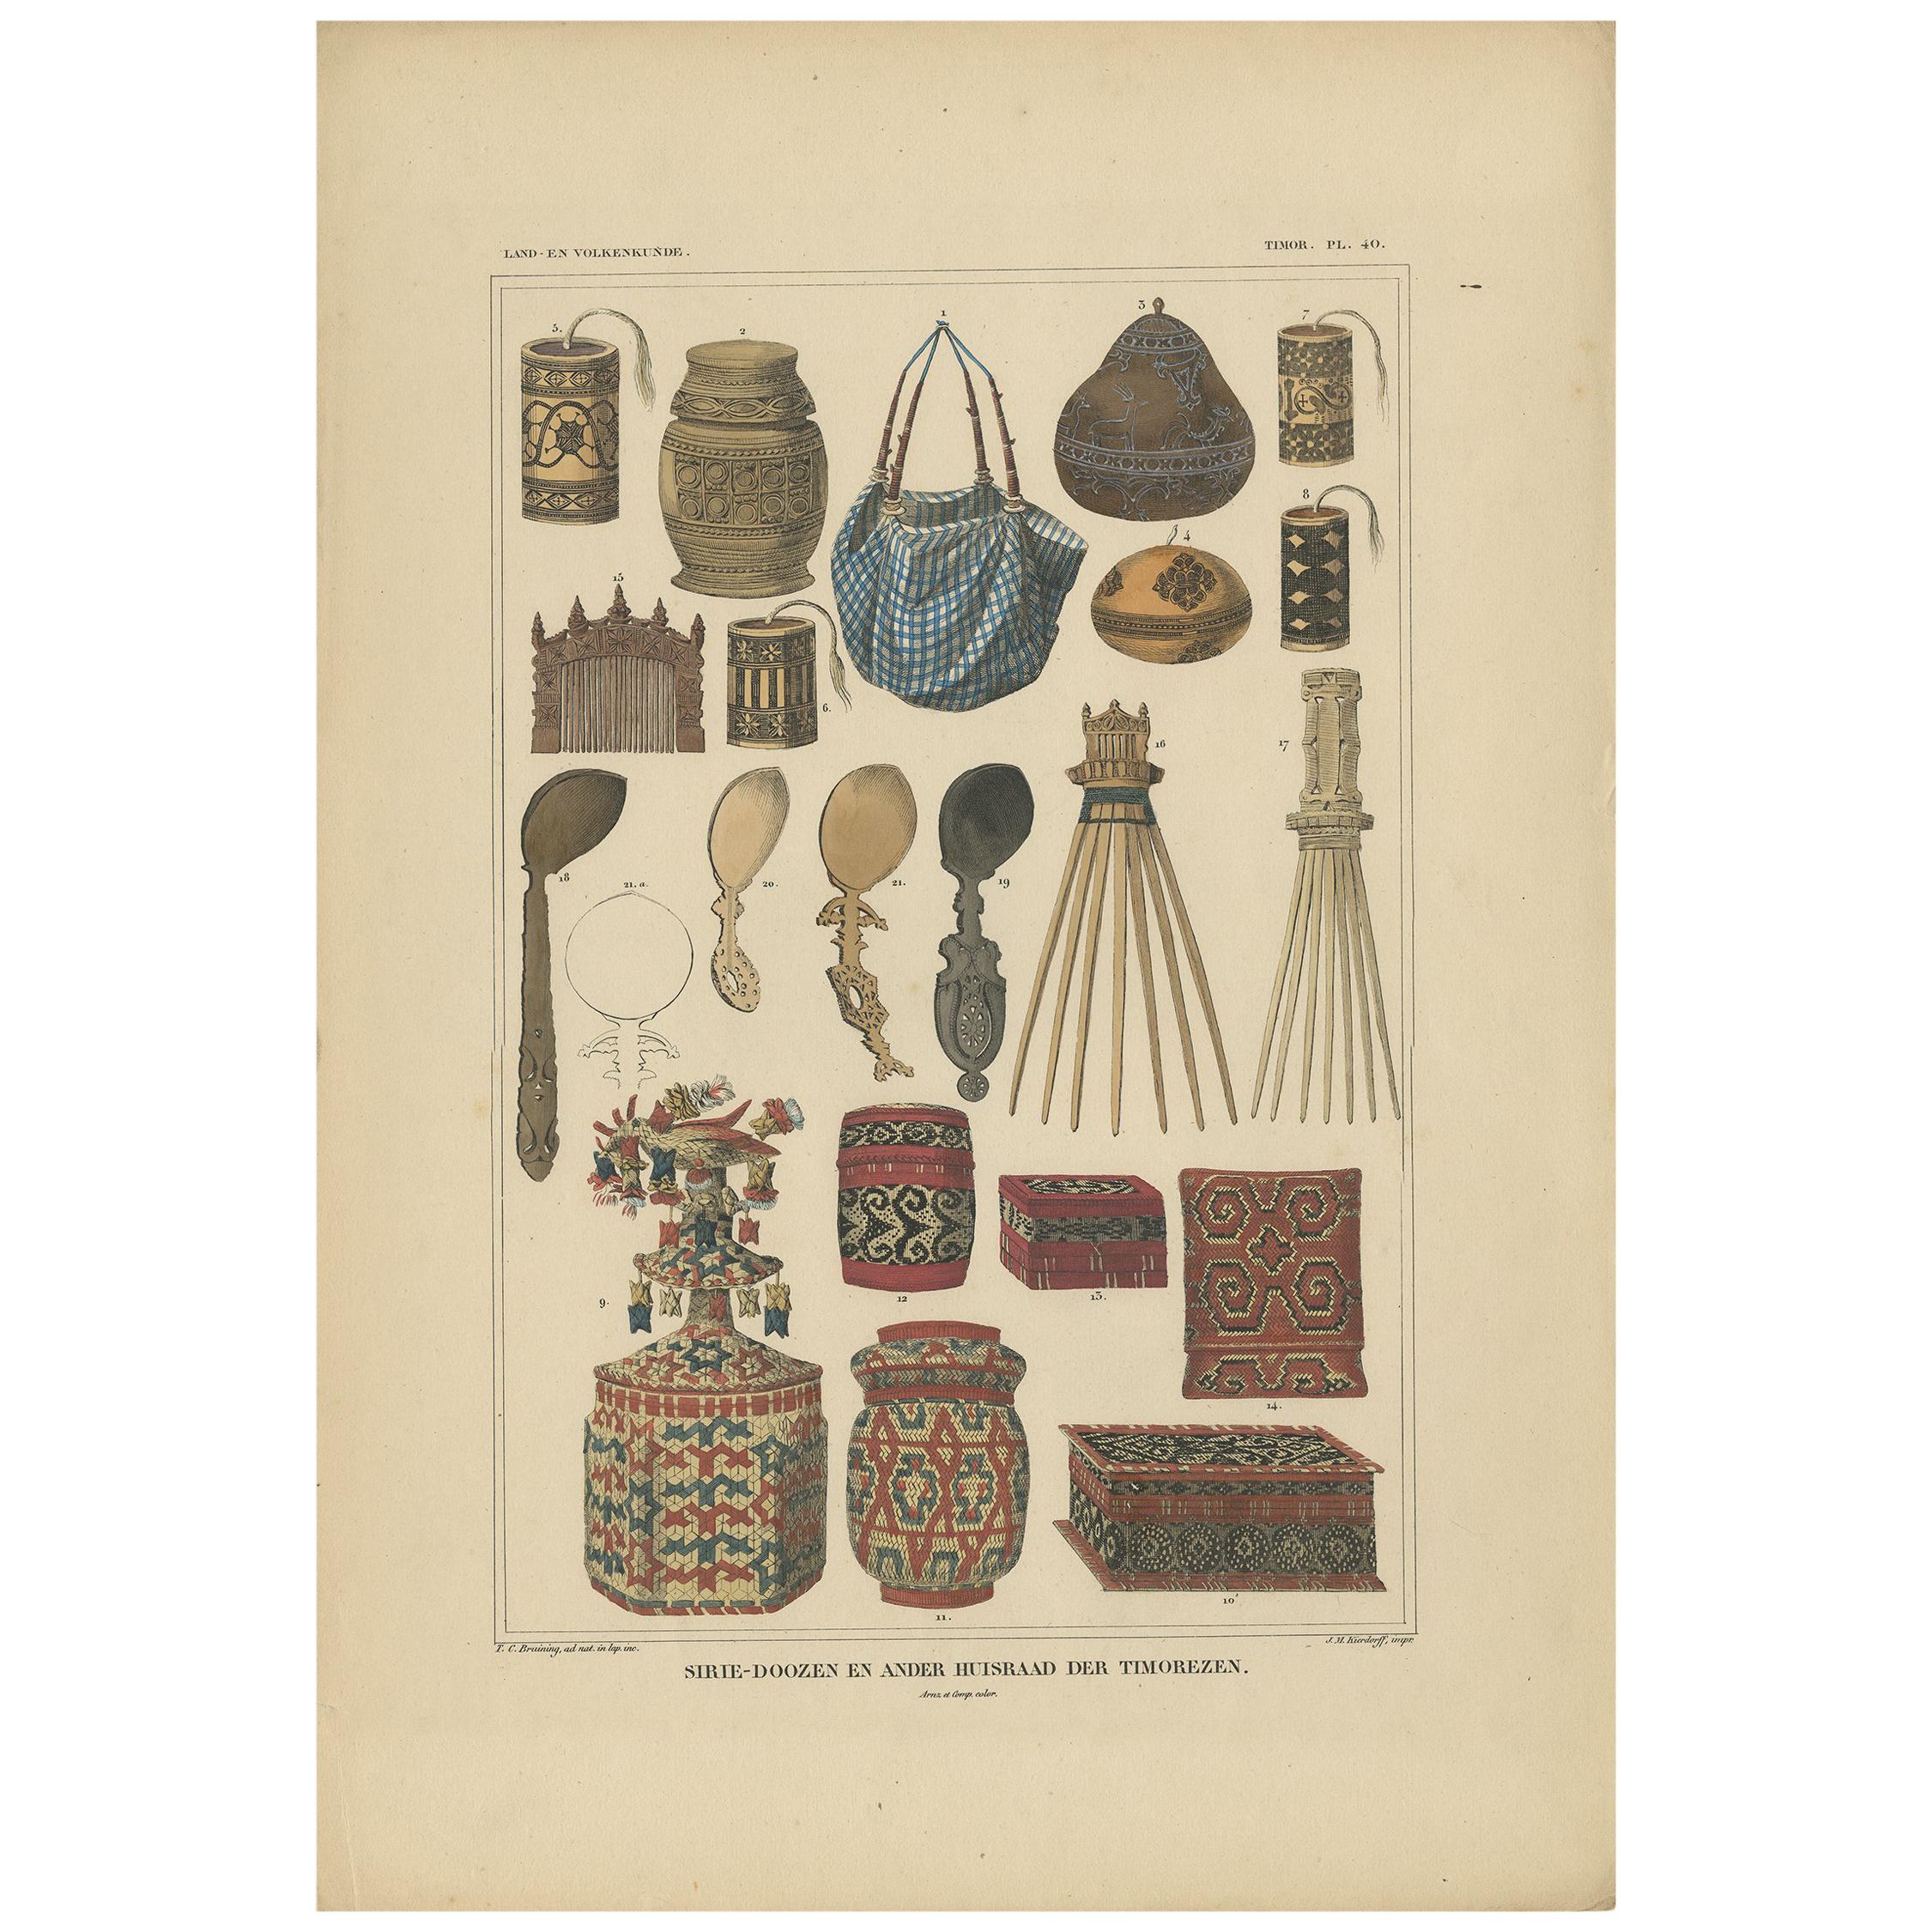 Antique Print with Various Furniture of Timor ‘Indonesia’, Temminck, circa 1840